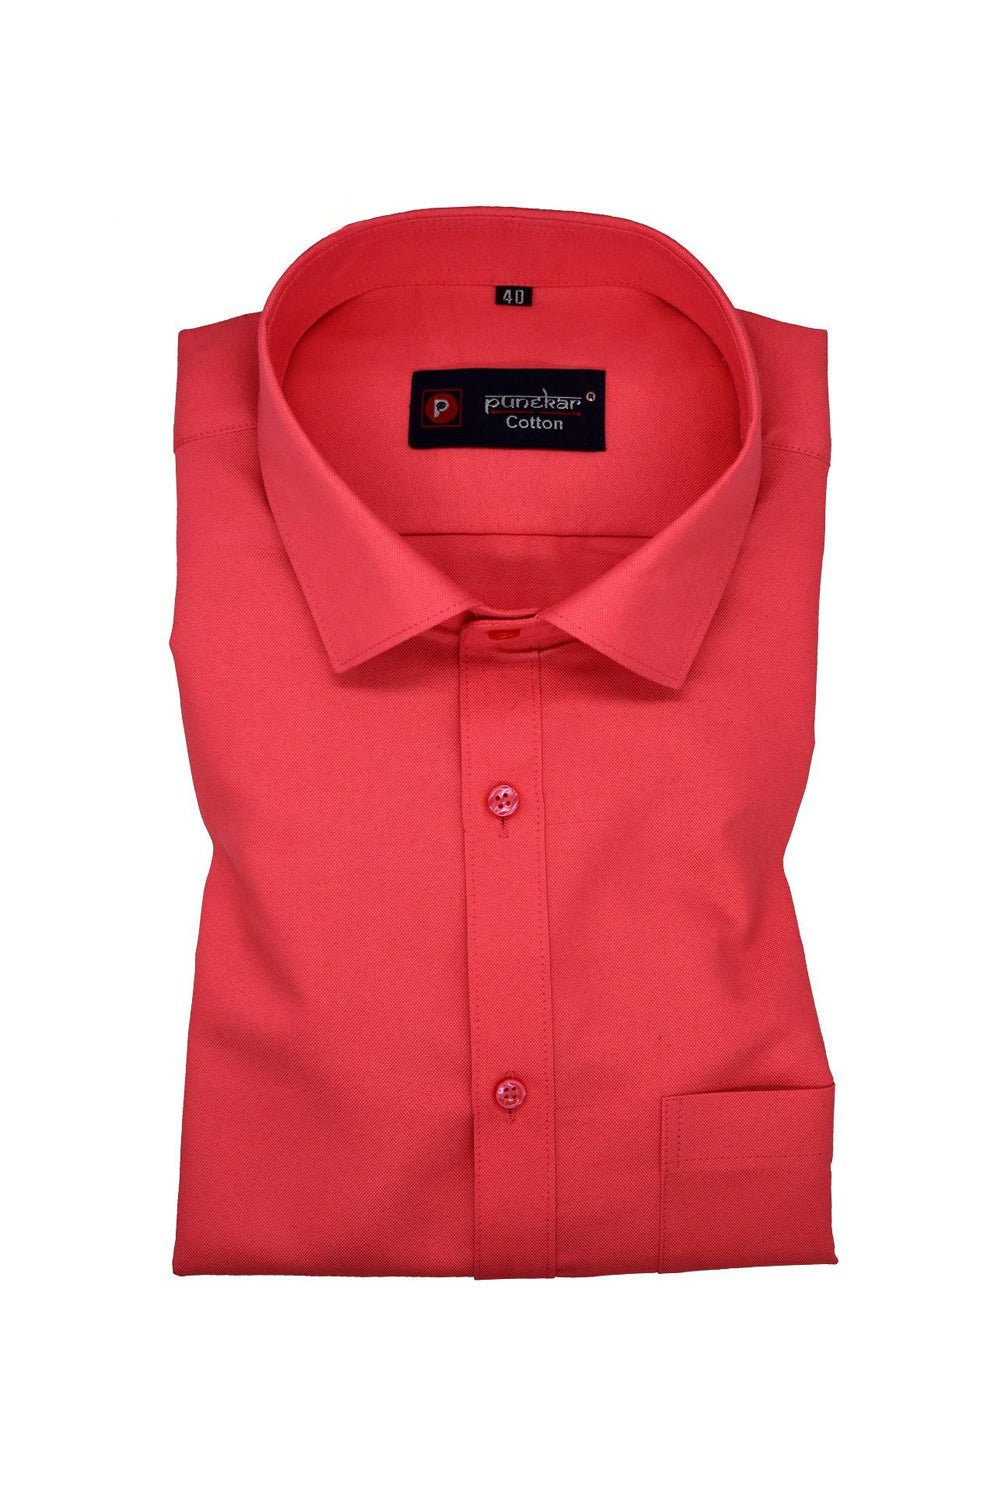 Punekar Cotton Bright Red Rich Cotton Formal Shirt For Men&